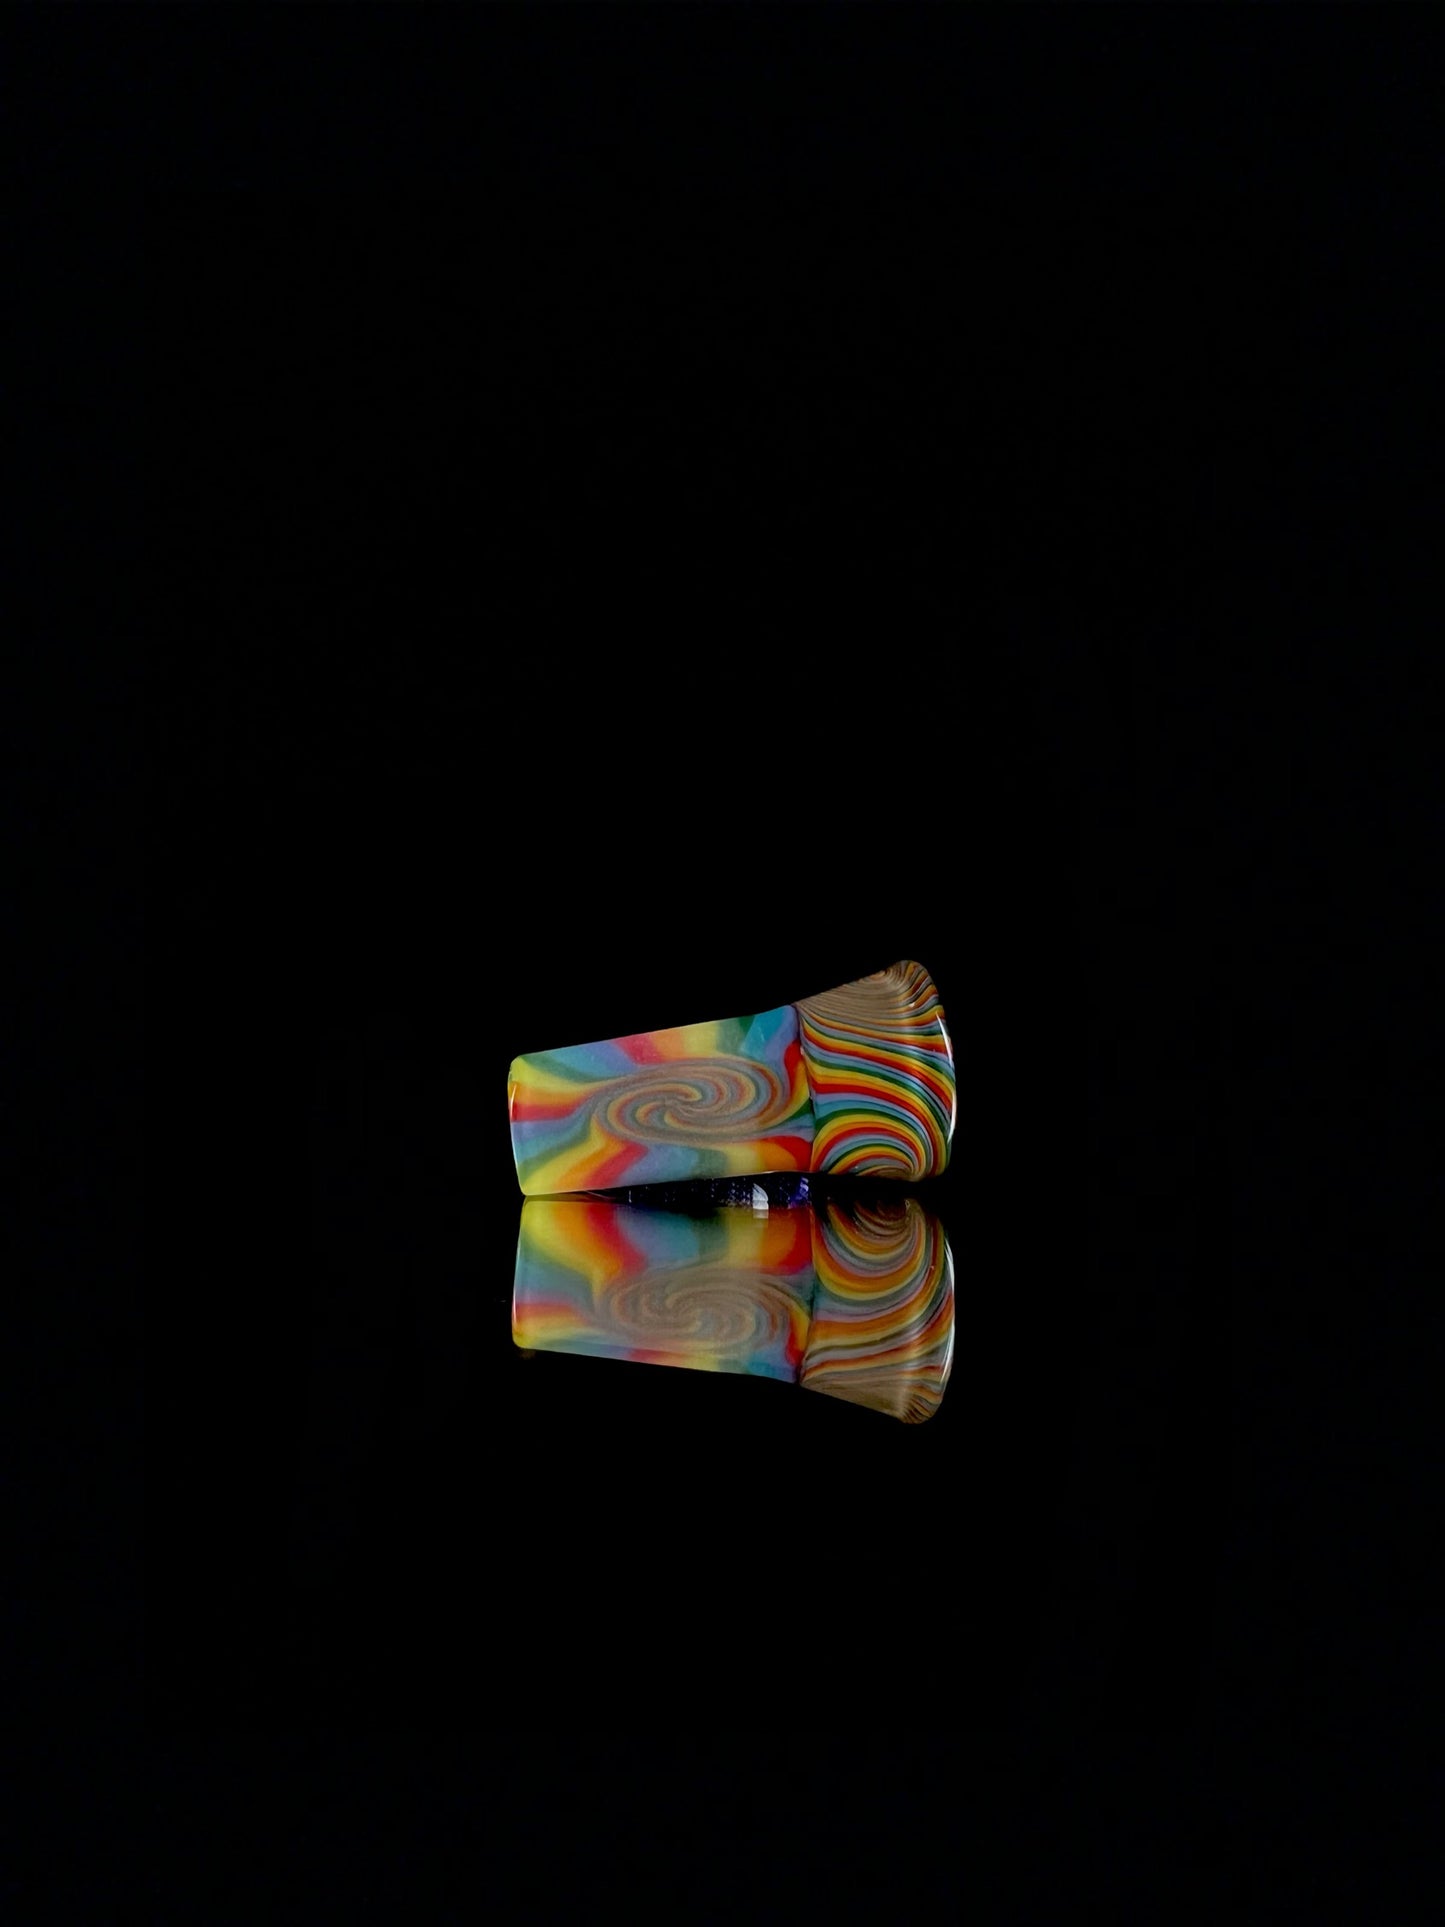 18mm fully-worked rainbow line work slide by OJ Flame